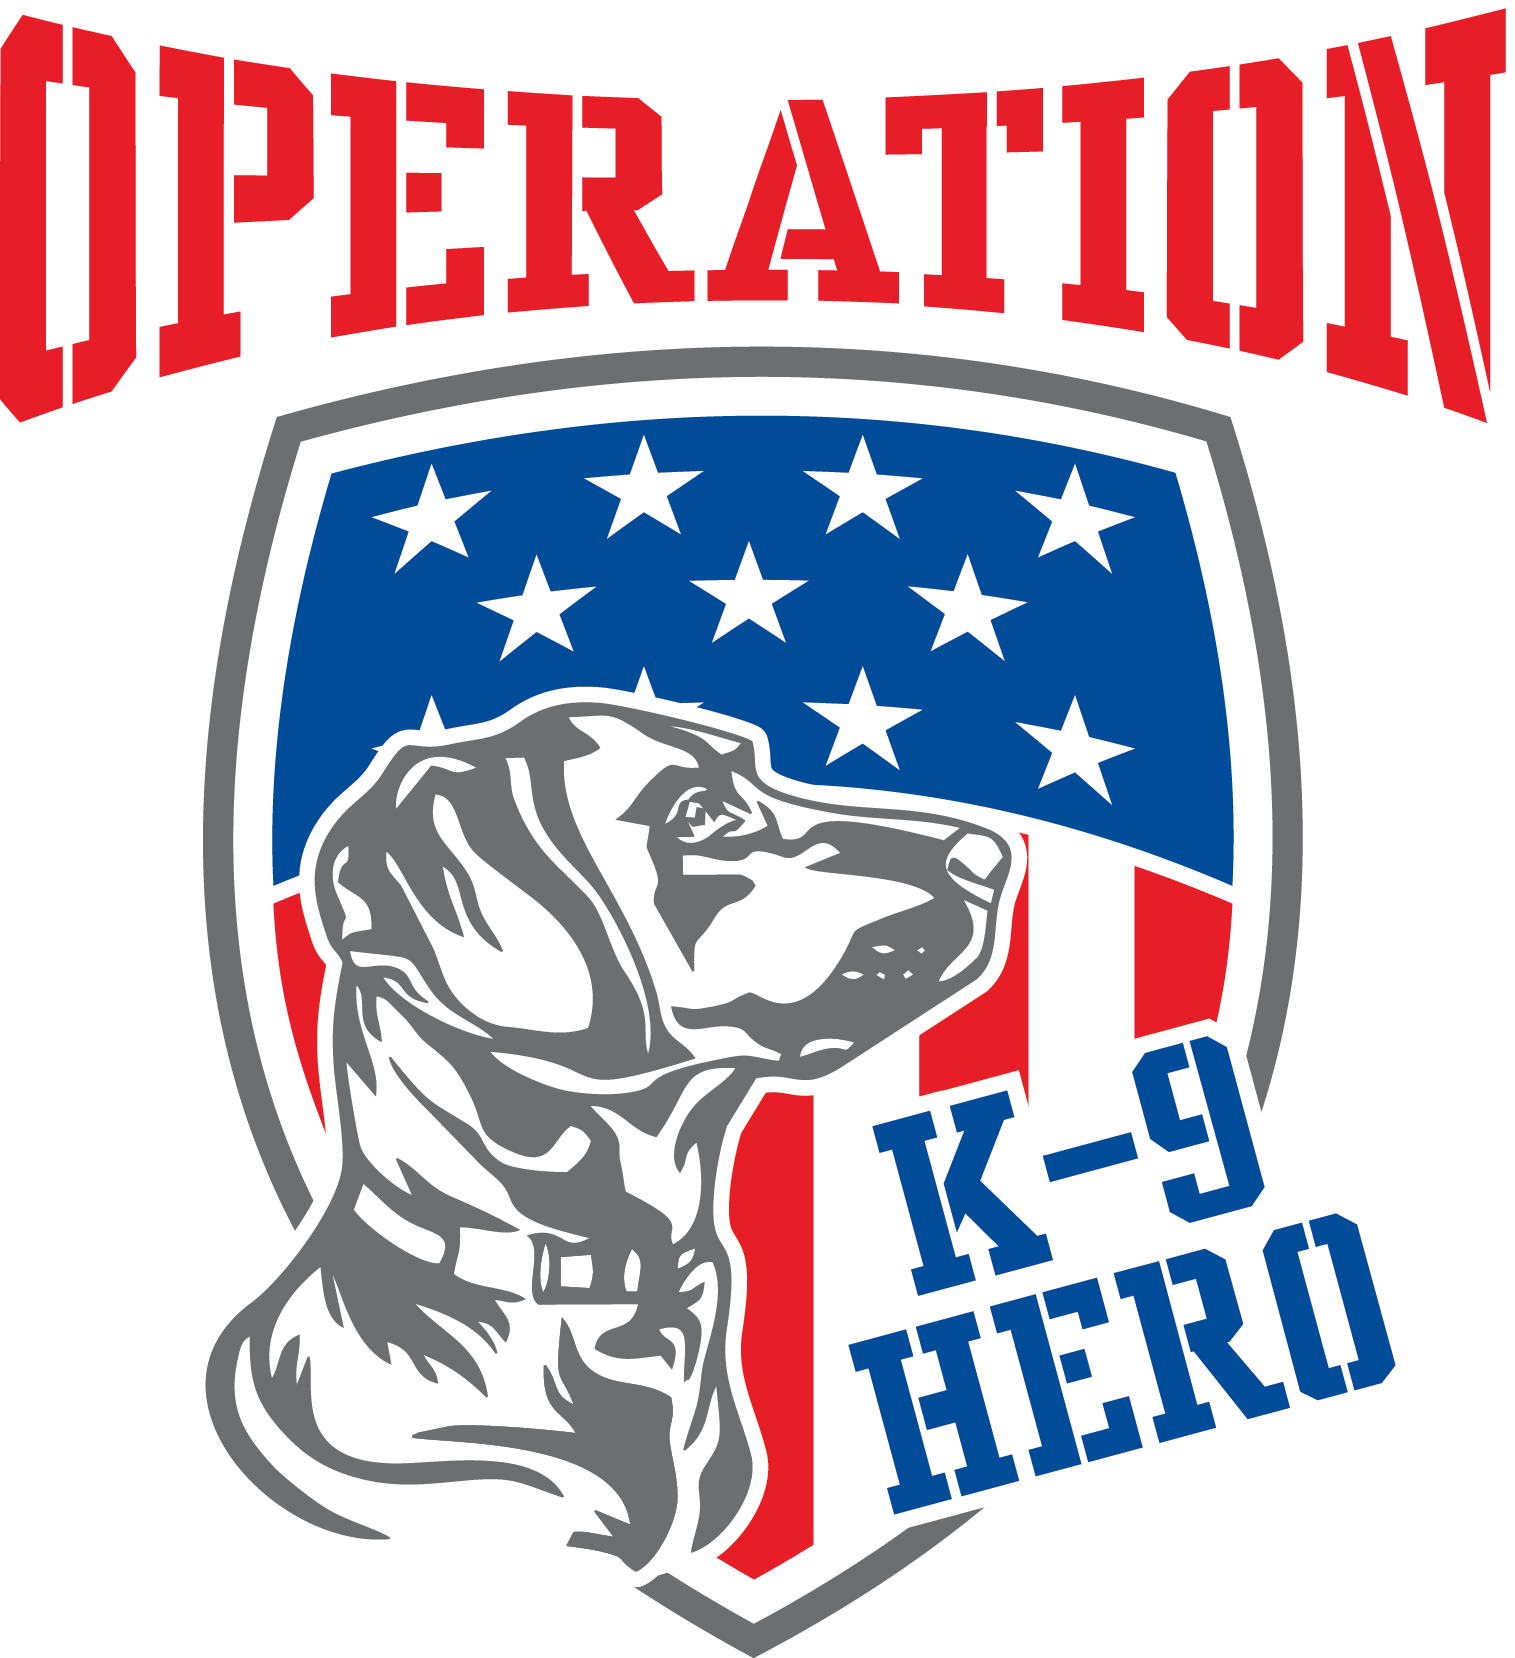 Operation K-9 Hero